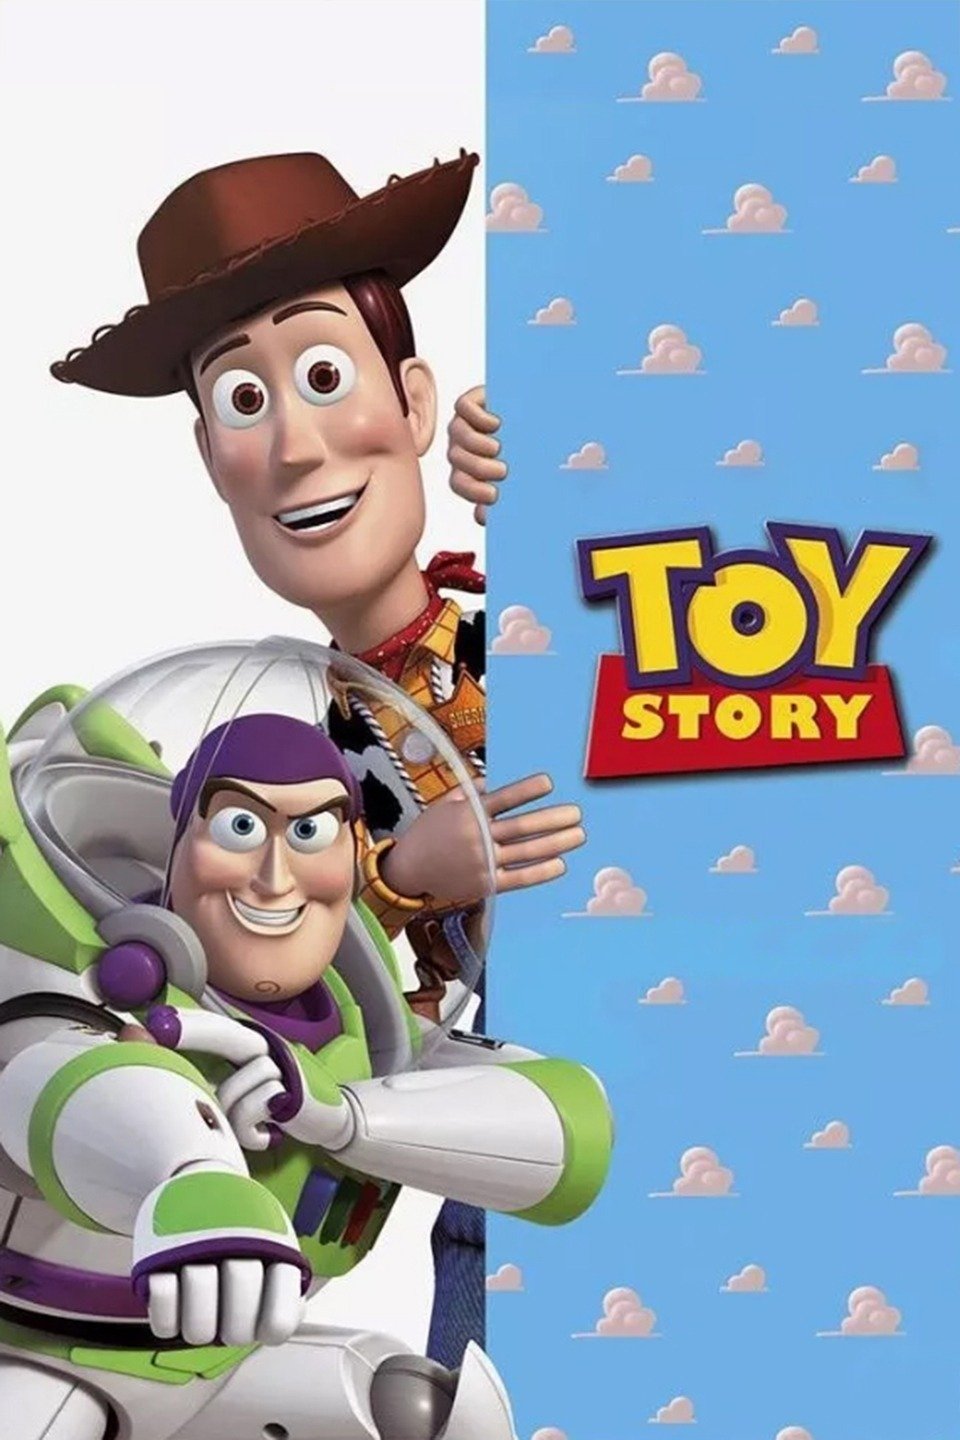 [MINI-HD] Toy Story (1995) ทอย สตอรี่ ภาค 1 [720p] [พากย์ไทย 5.1 + อังกฤษ 5.1] [บรรยายไทย + อังกฤษ] [เสียงไทย + ซับไทย] [ONE2UP]